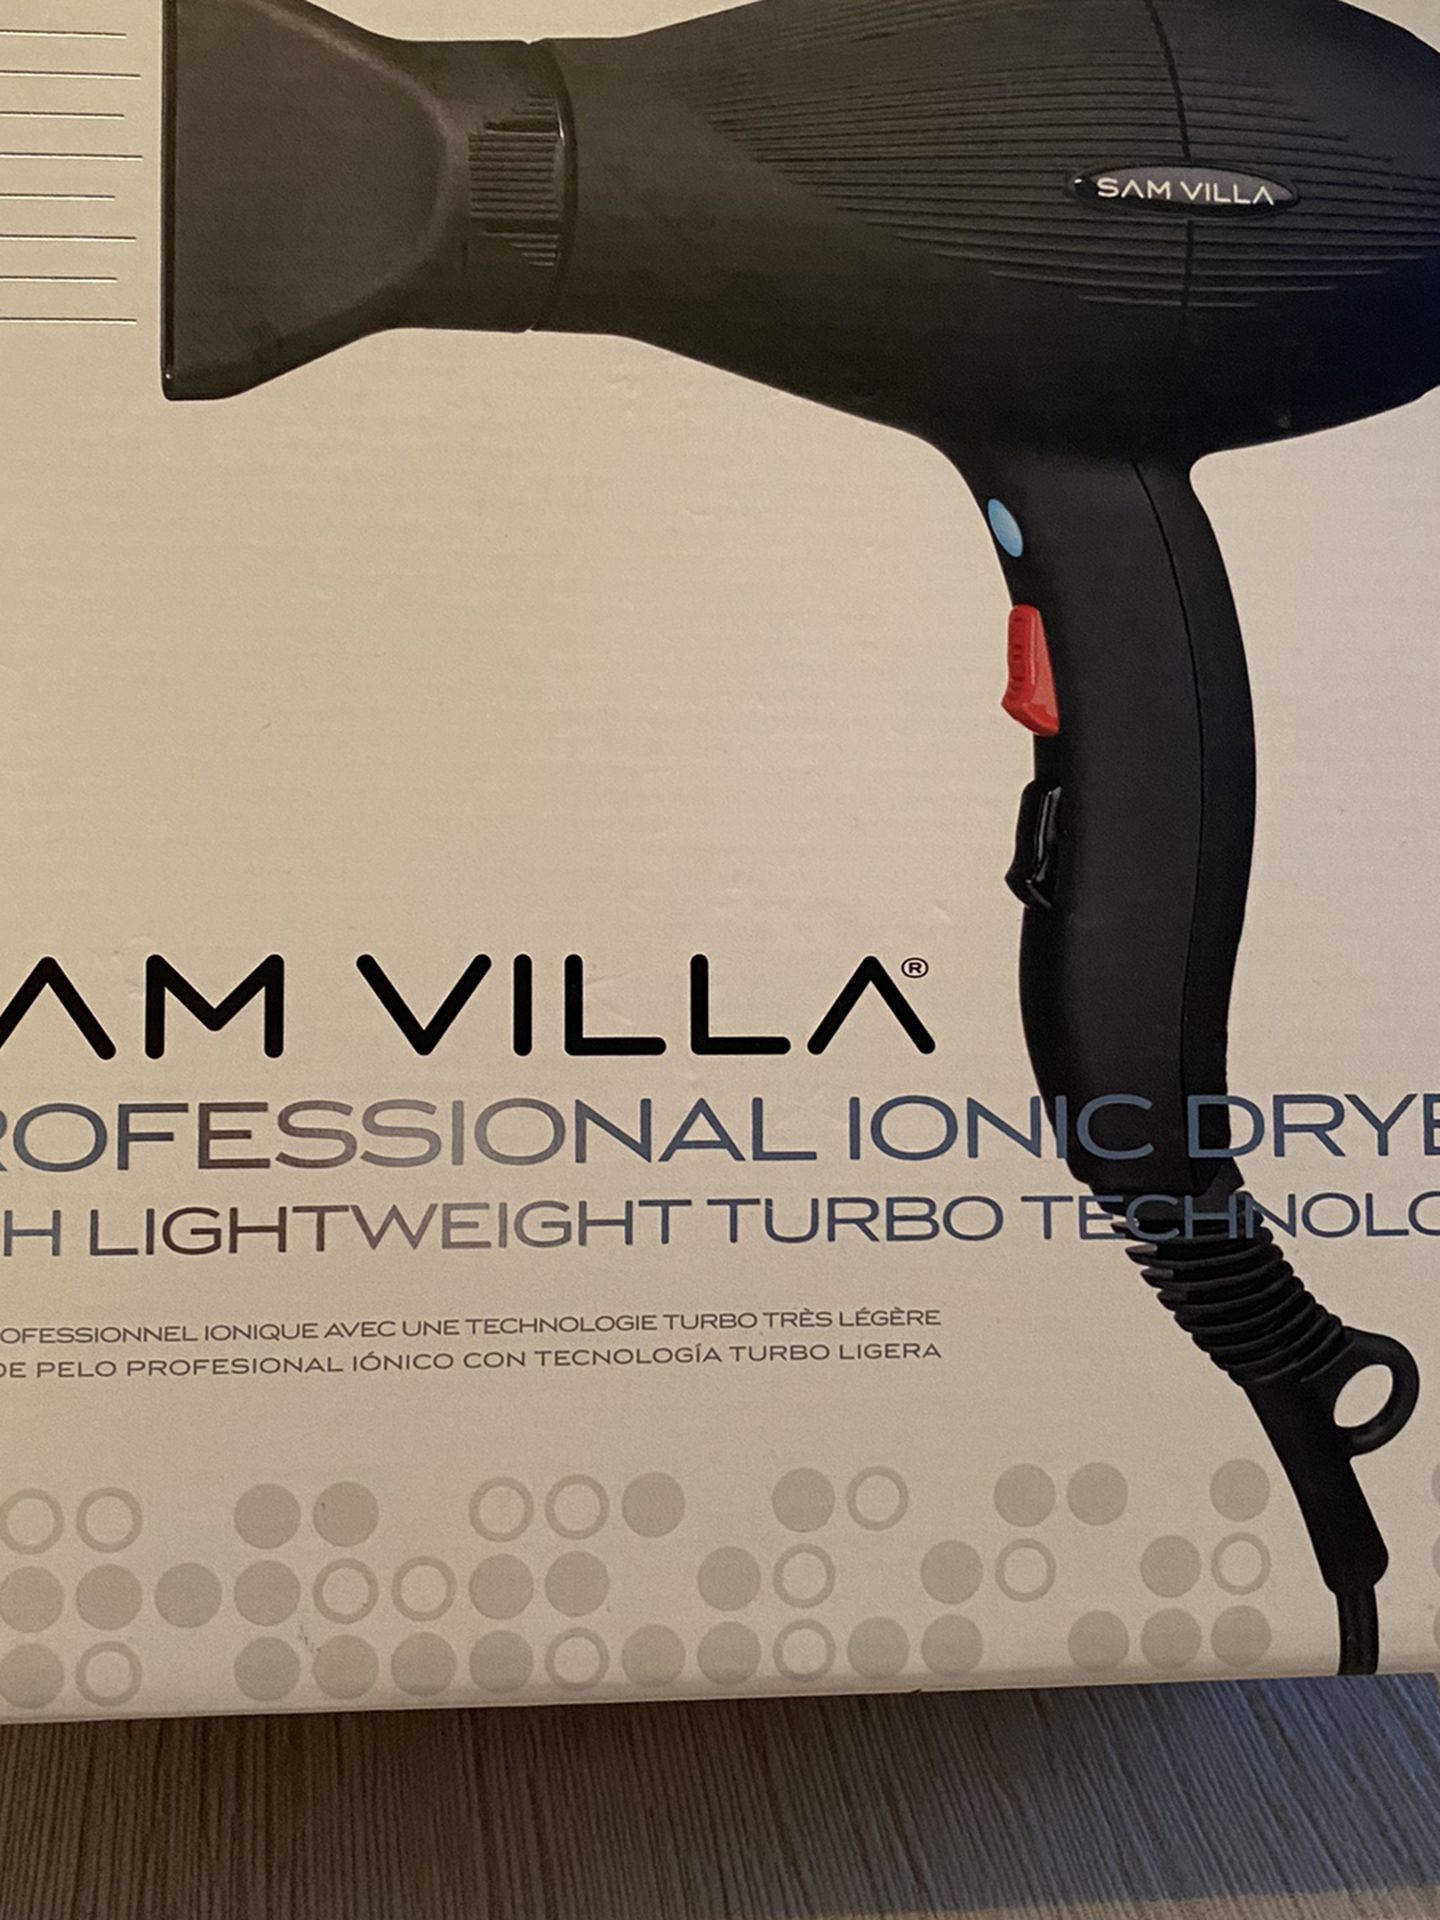 Sam Villa Professional Ionic Dryer